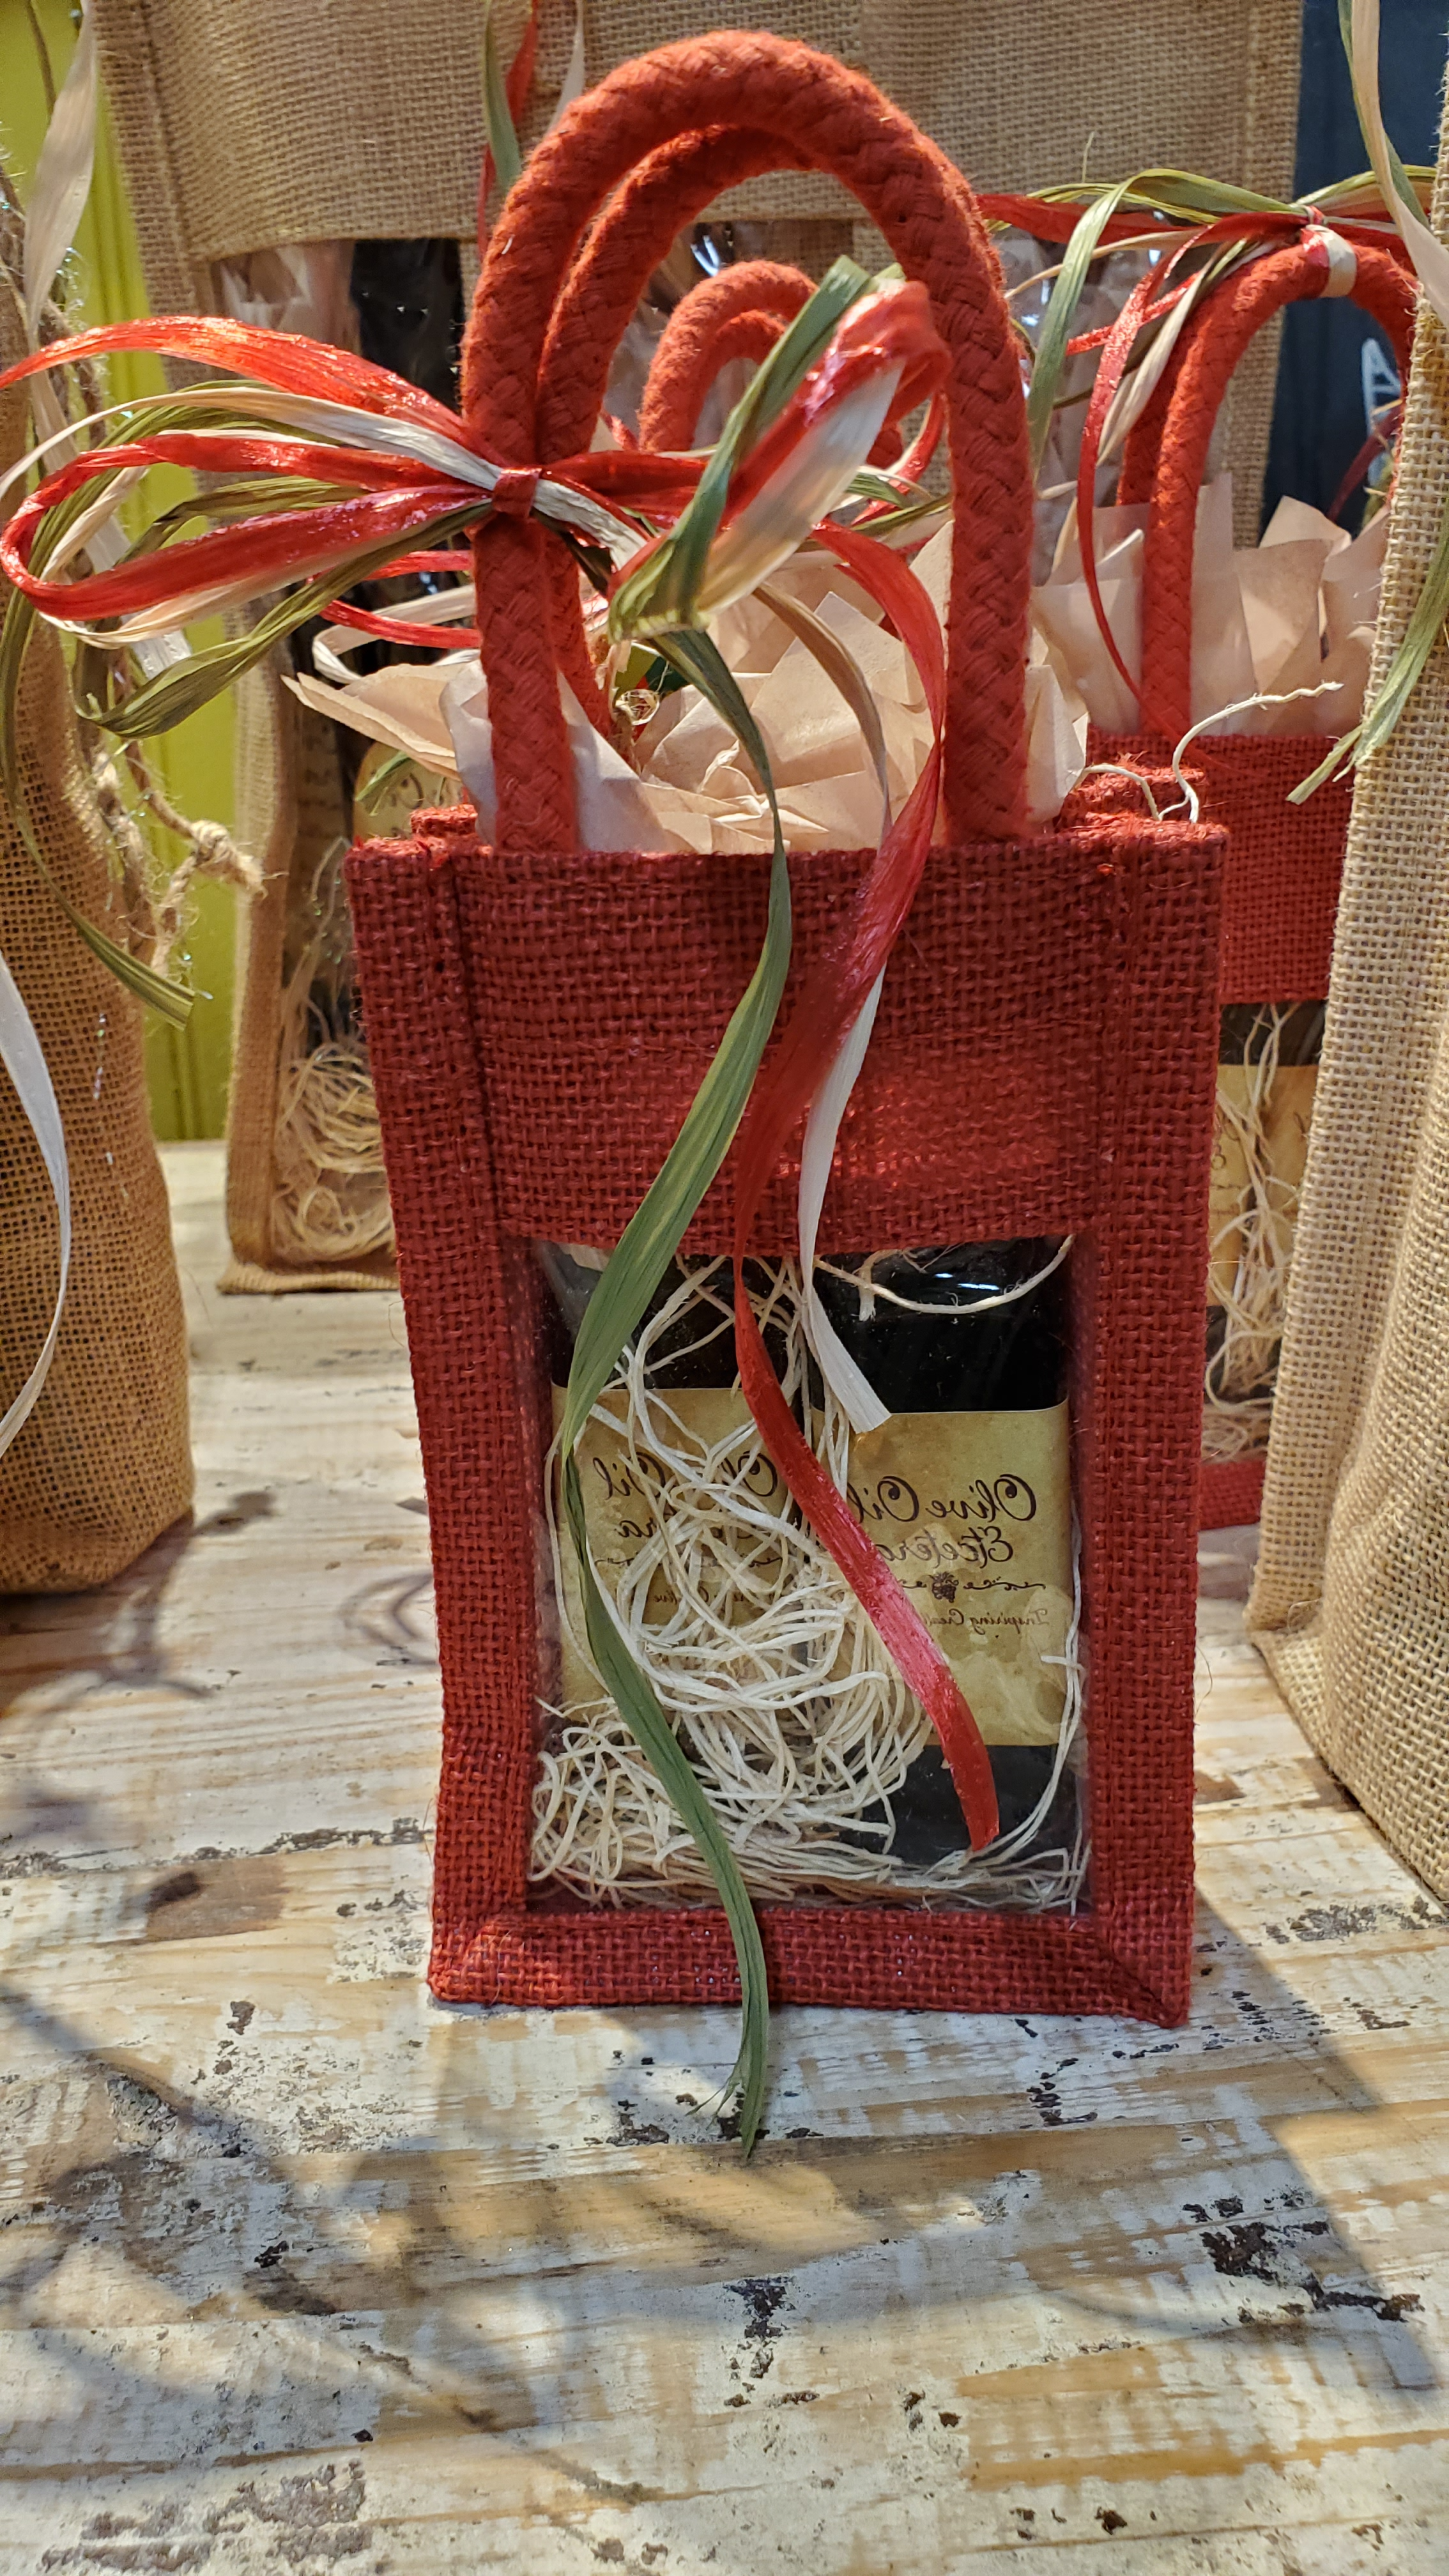 Burlap Sample bag - Olive Oil Etcetera - Bucks county's gourmet olive oil and vinegar shop